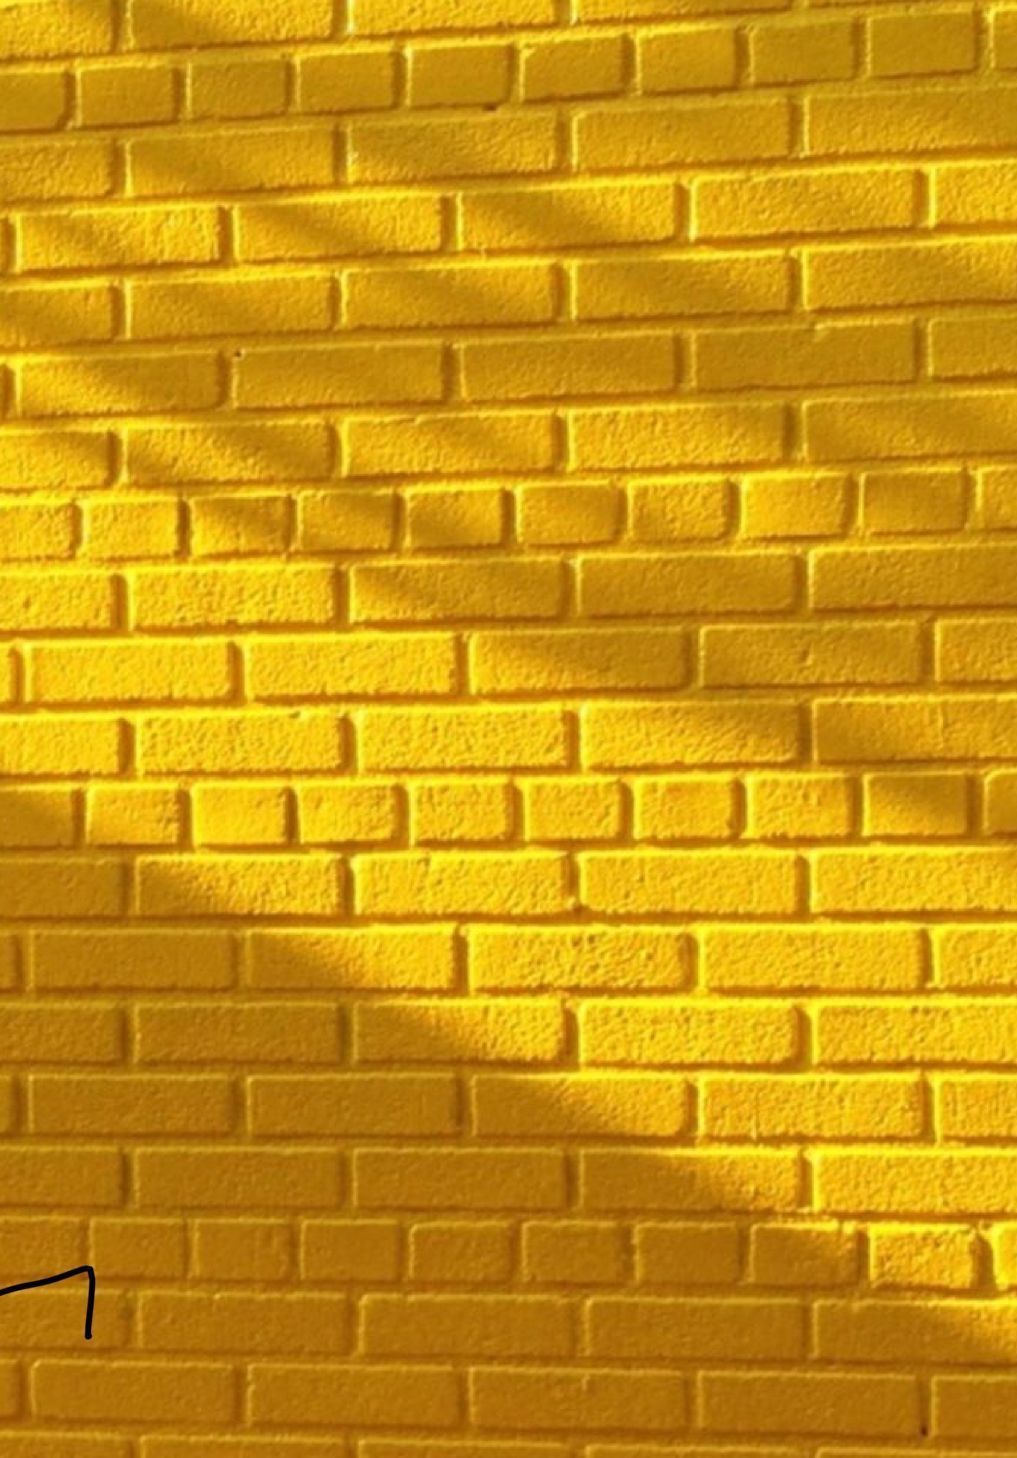 A yellow brick wall with shadows - Yellow